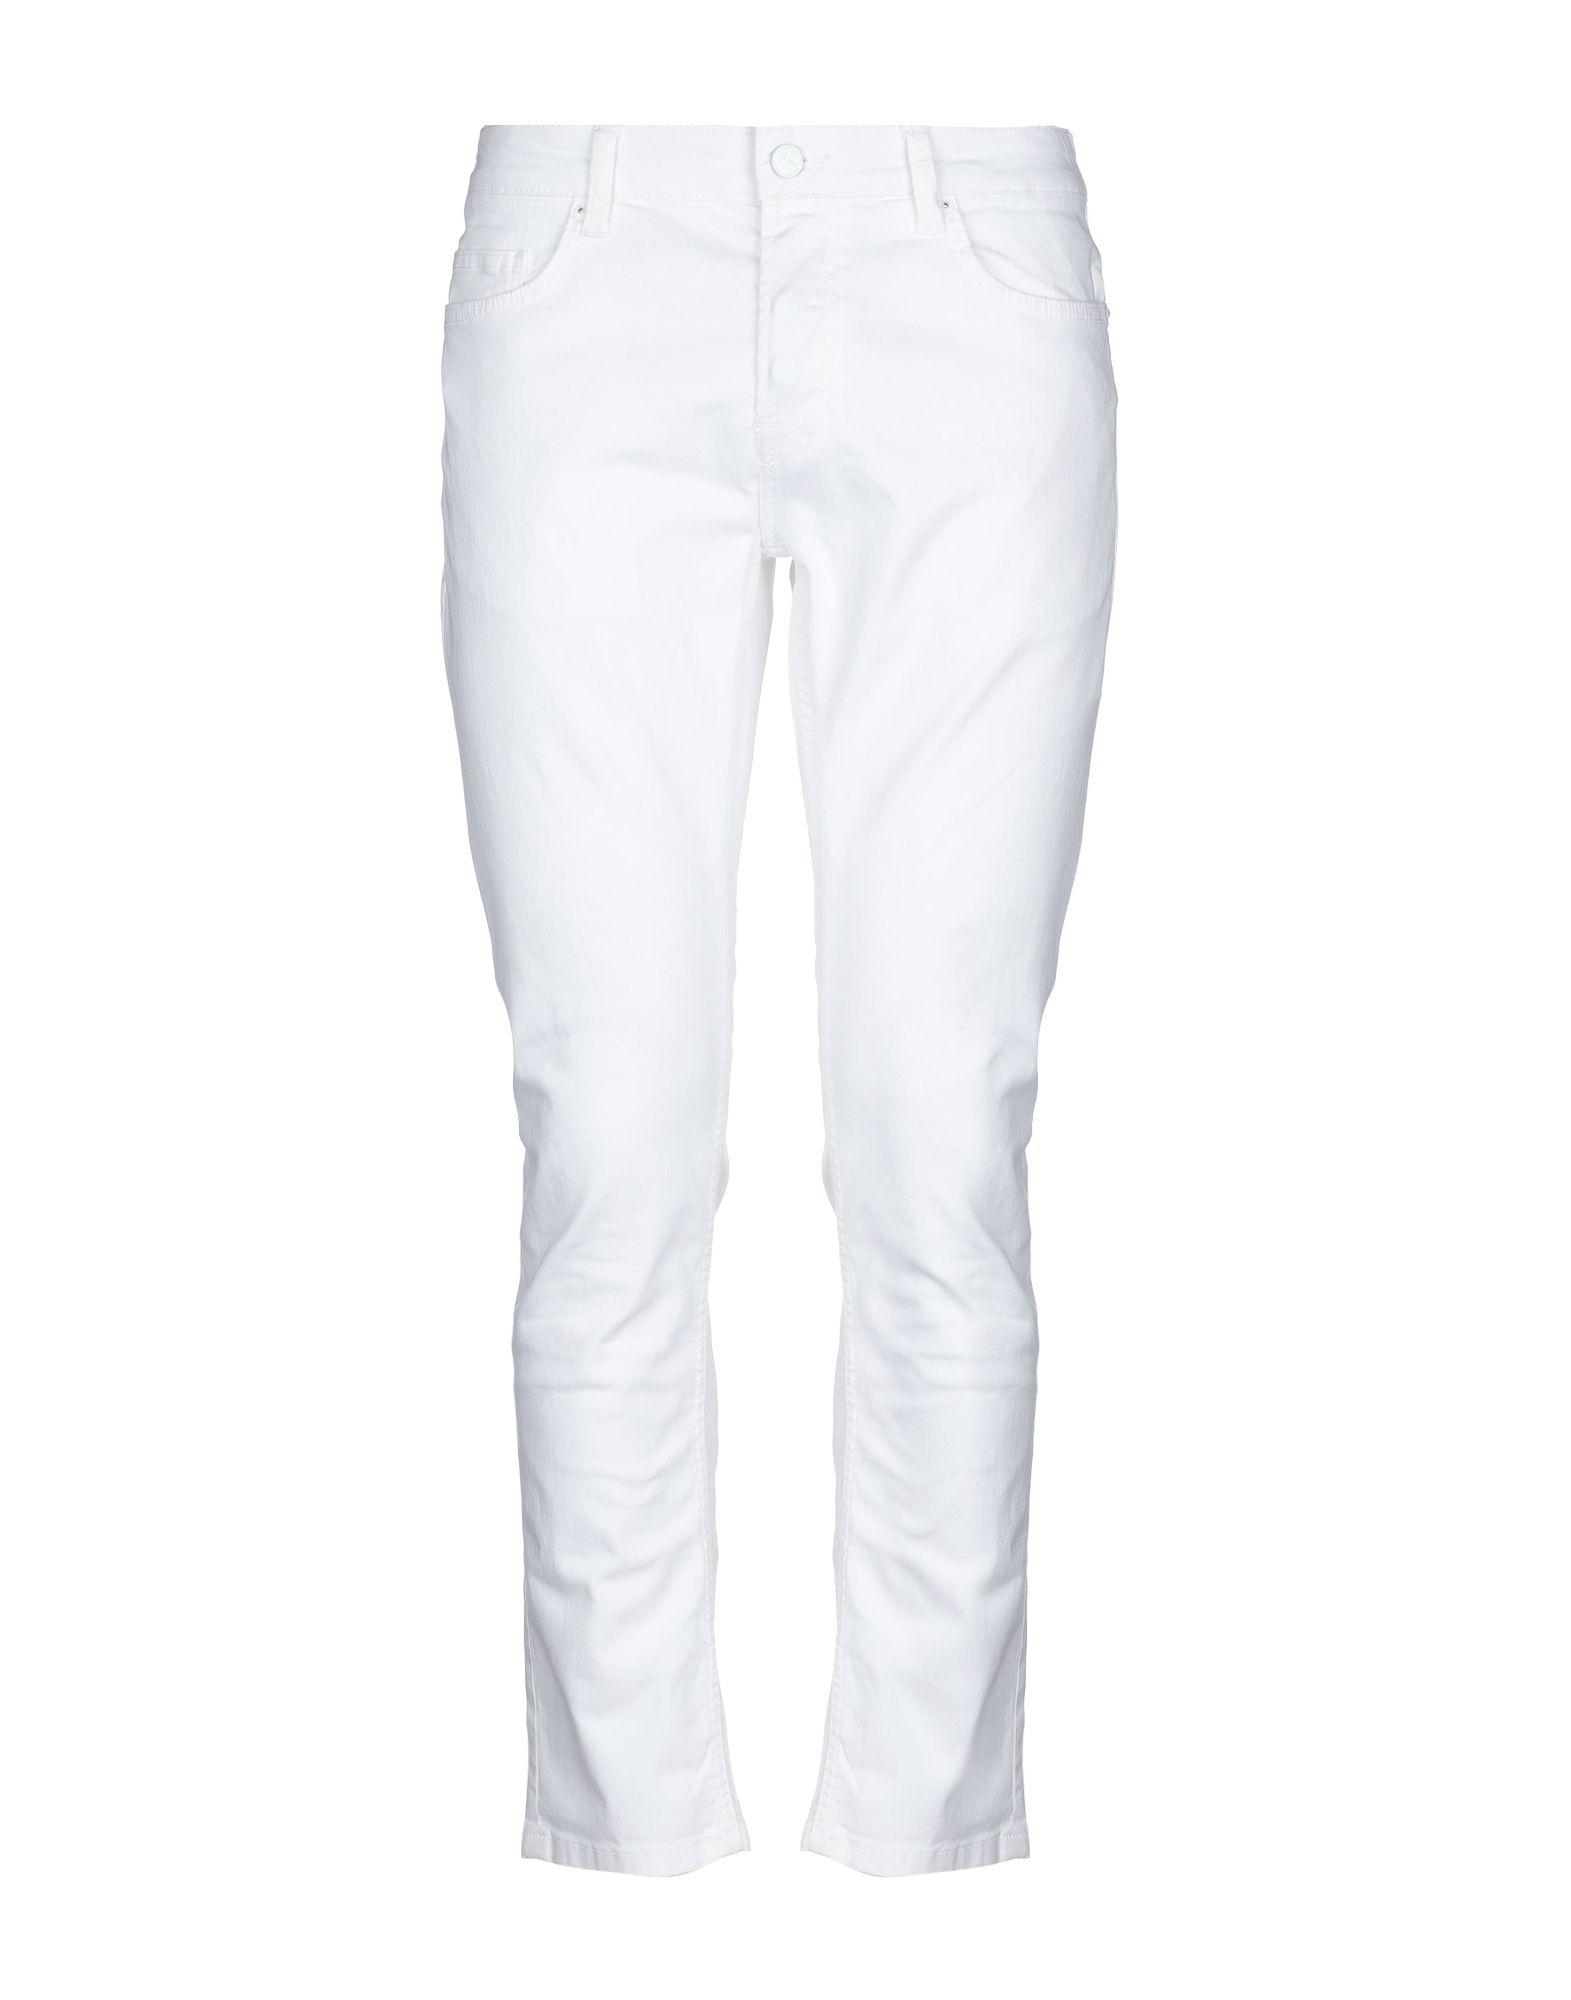 Only & Sons Denim Pants in White for Men - Lyst